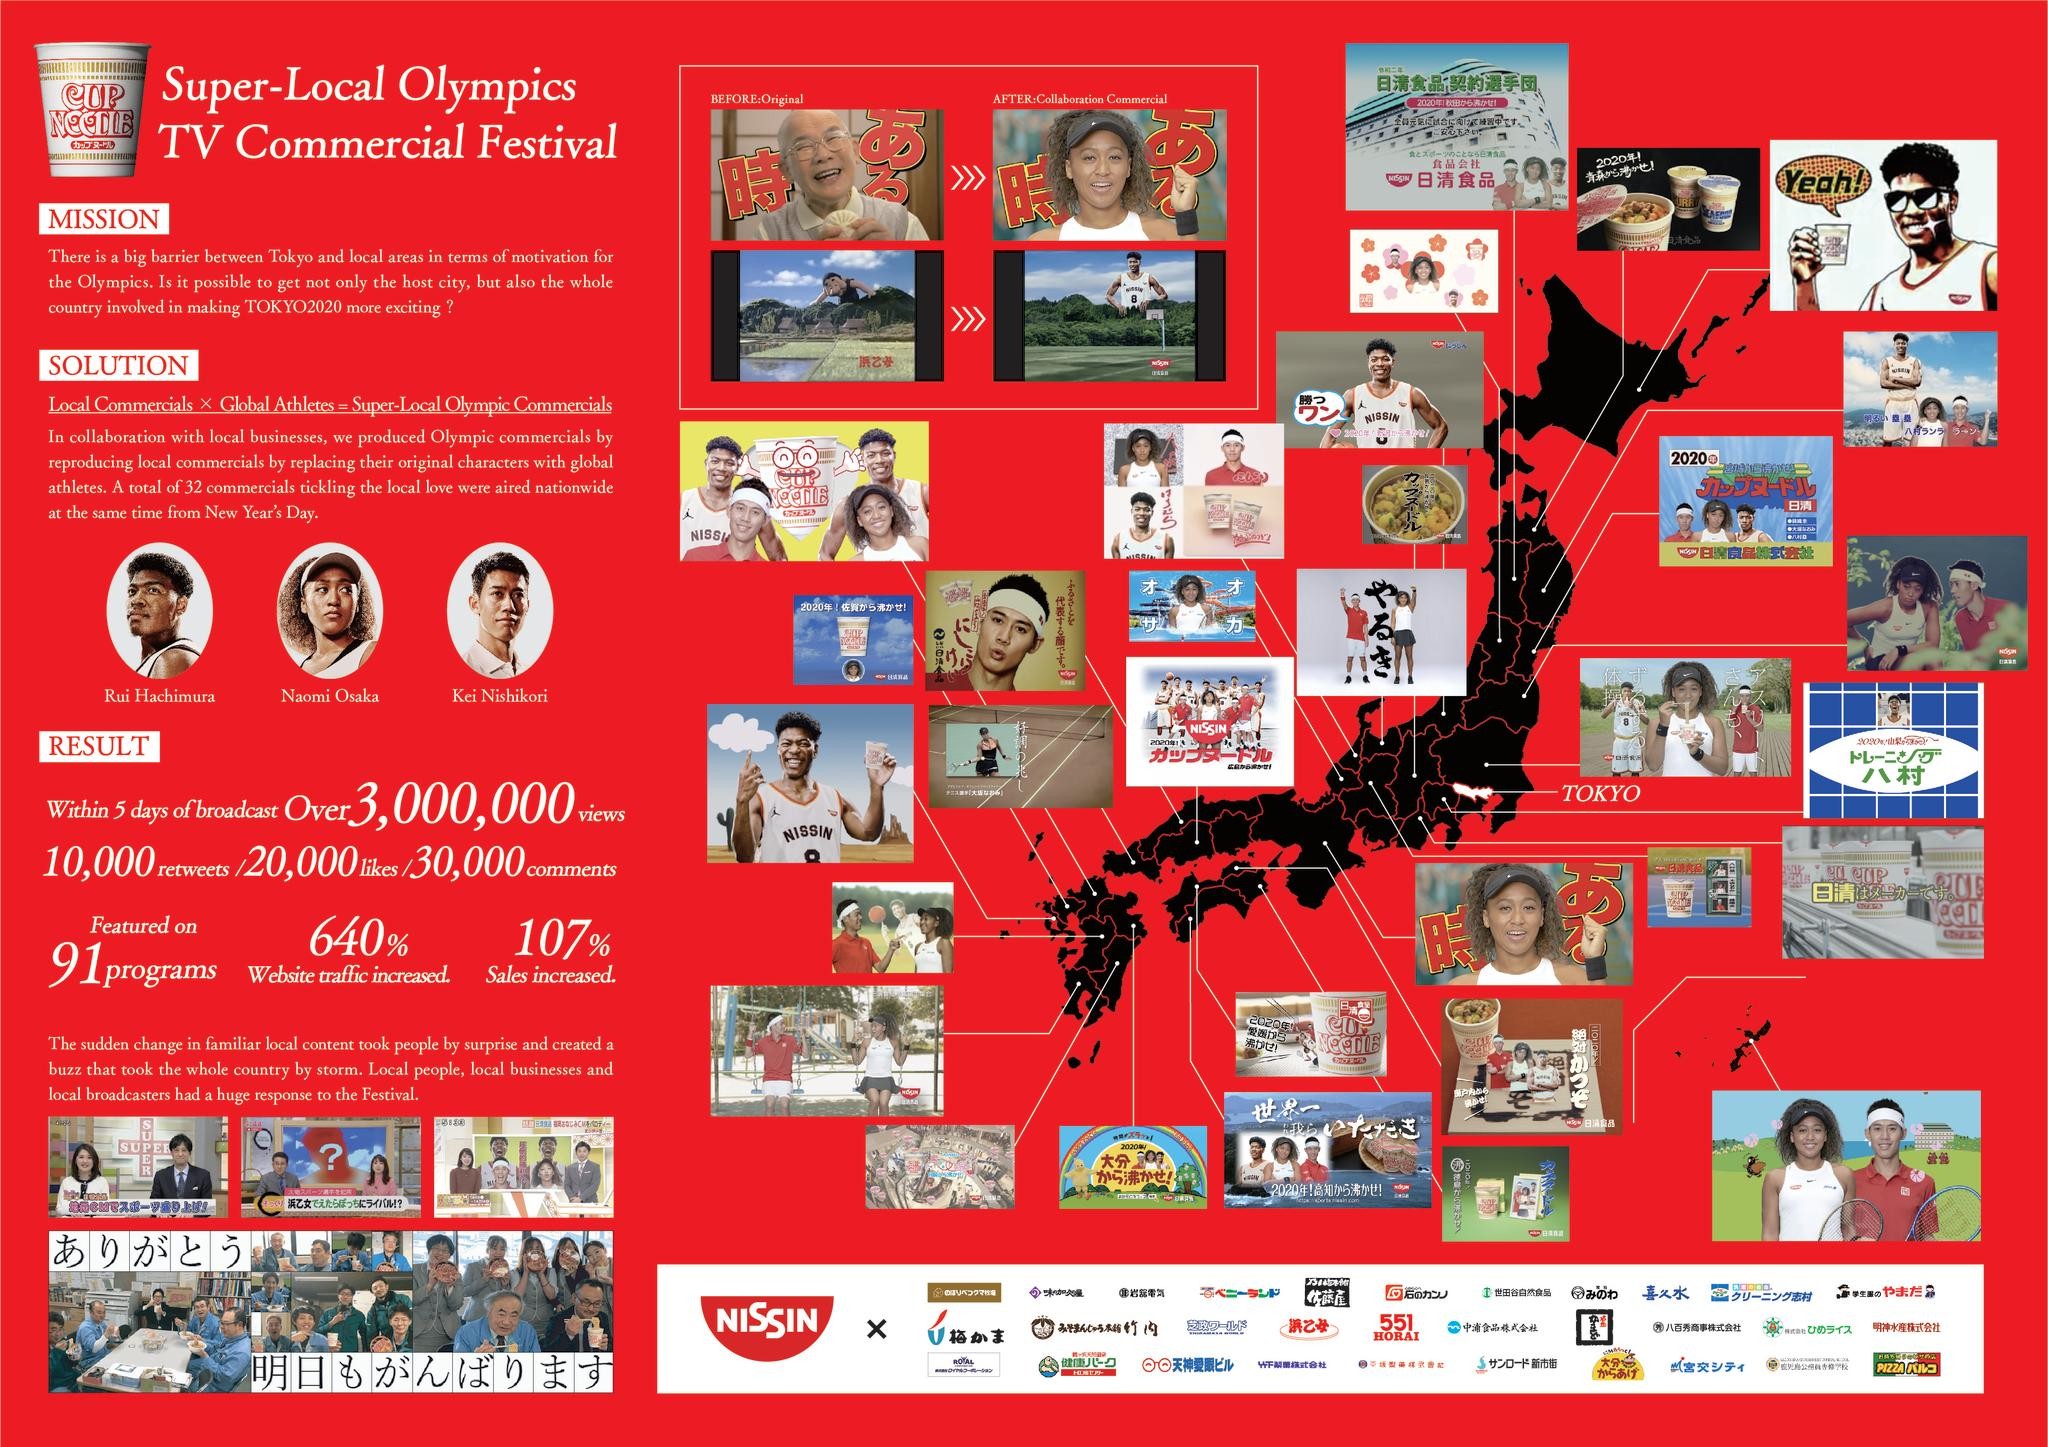 Super-Local Olympics TV Commercial Festival